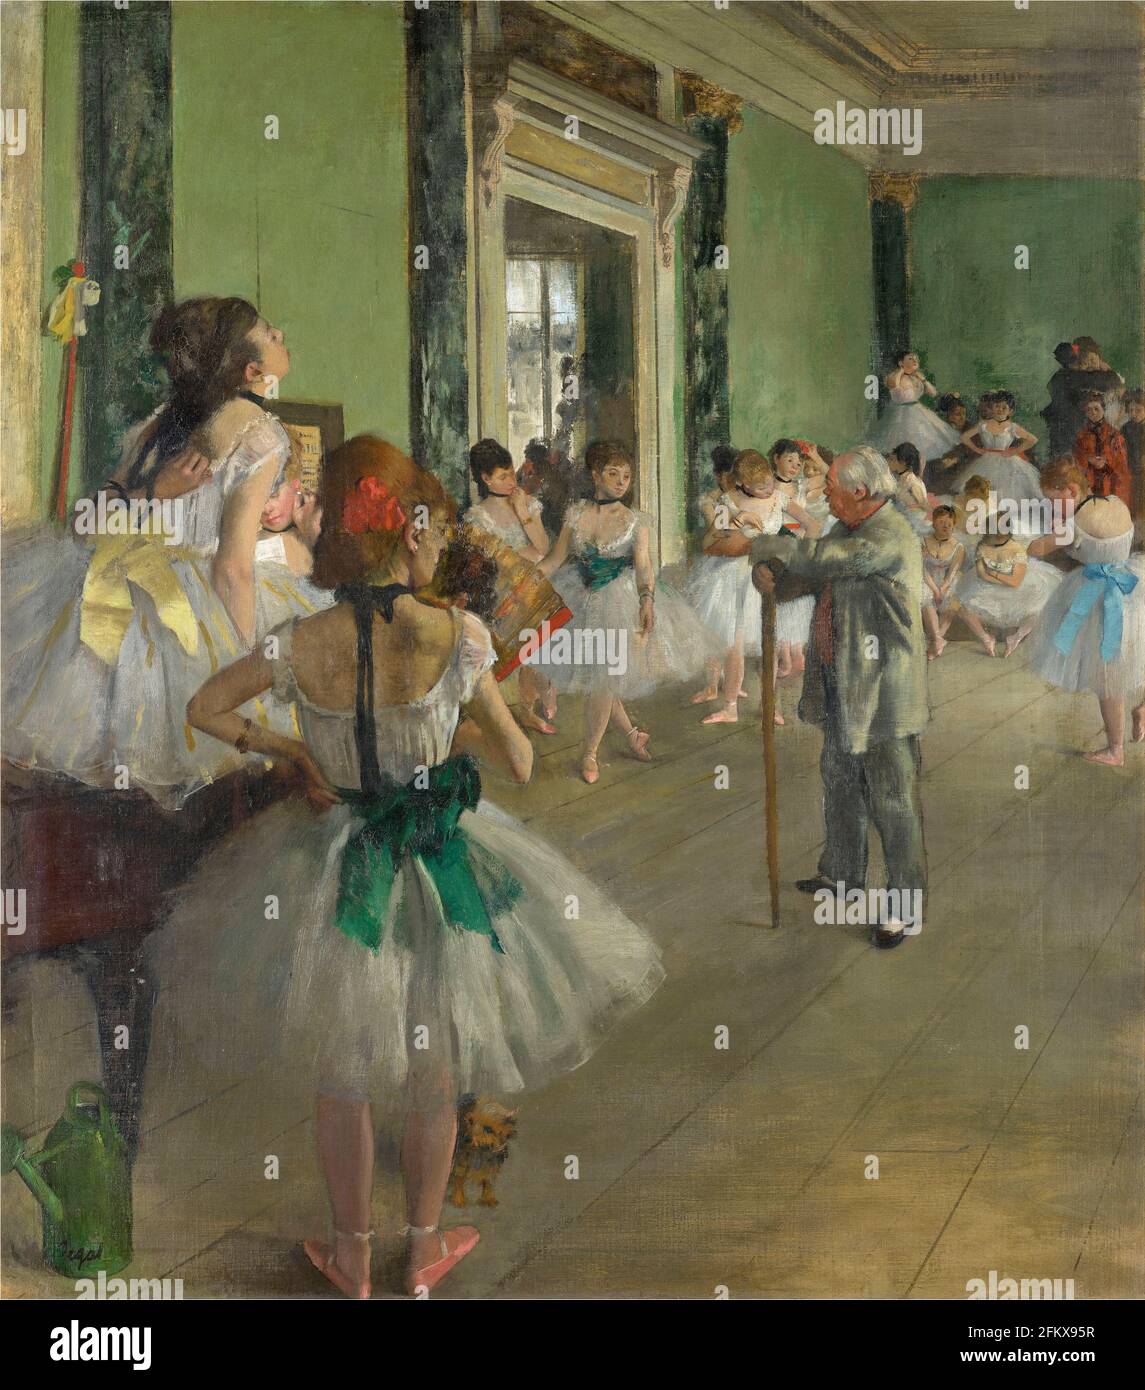 Titel: The Dancing Class Ersteller: Edgar Degas Datum: ca. 1873-76 Medium: Öl auf Leinwand Maße: 85x75 cm Ort: Musee d'Orsay, Paris, Frankreich Stockfoto